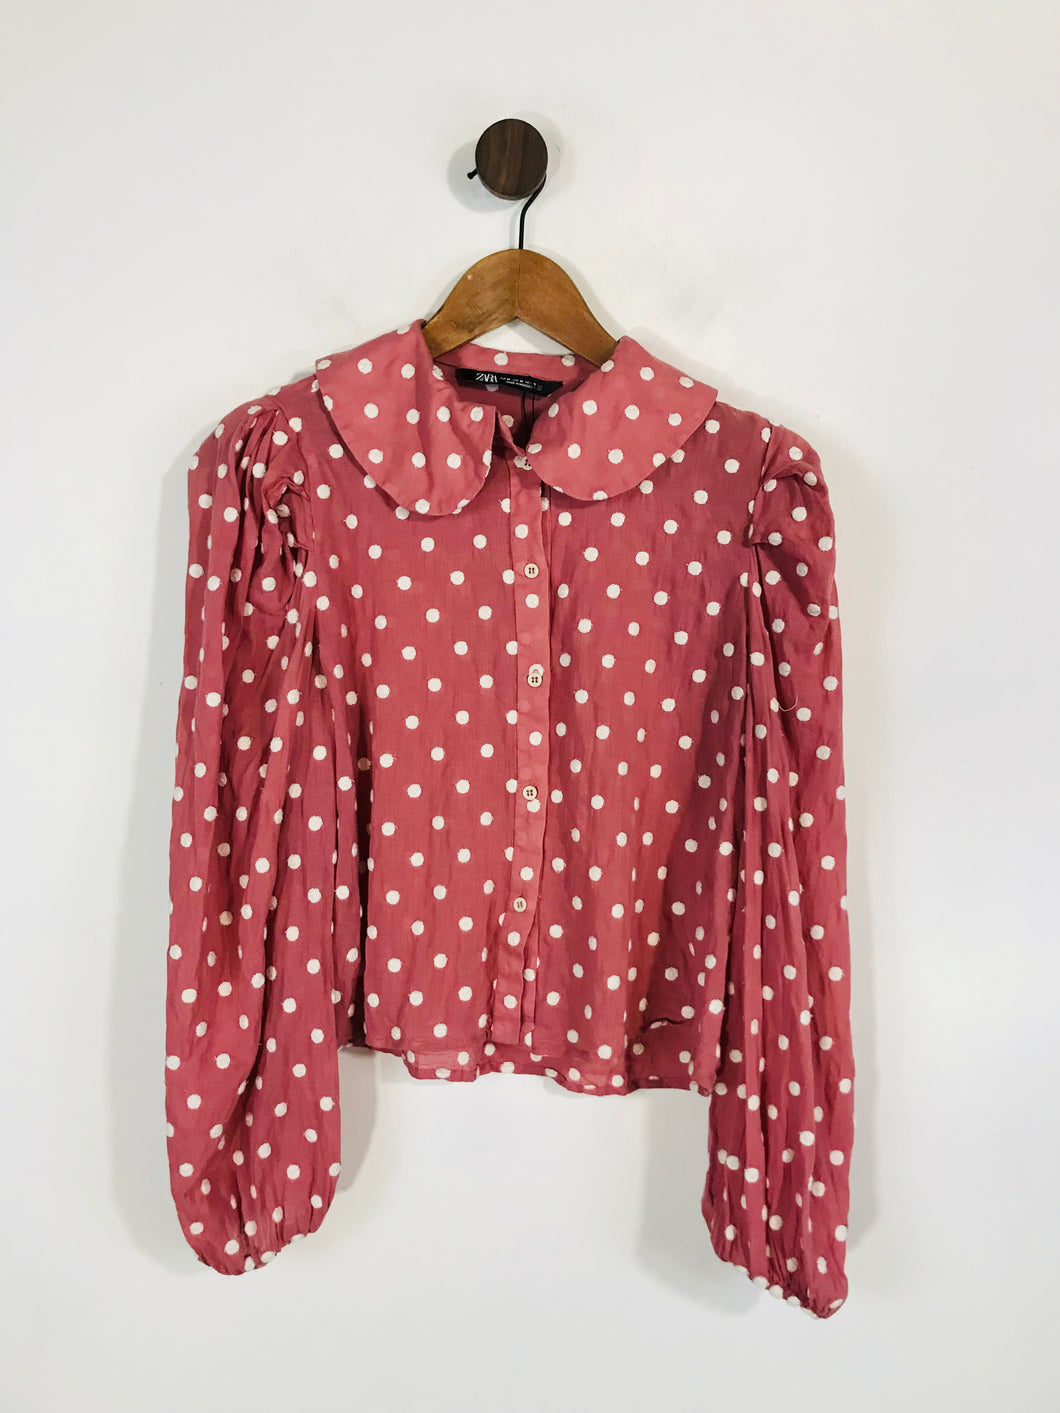 Zara Women's Polka Dot Button-Up Shirt | M UK10-12 | Pink